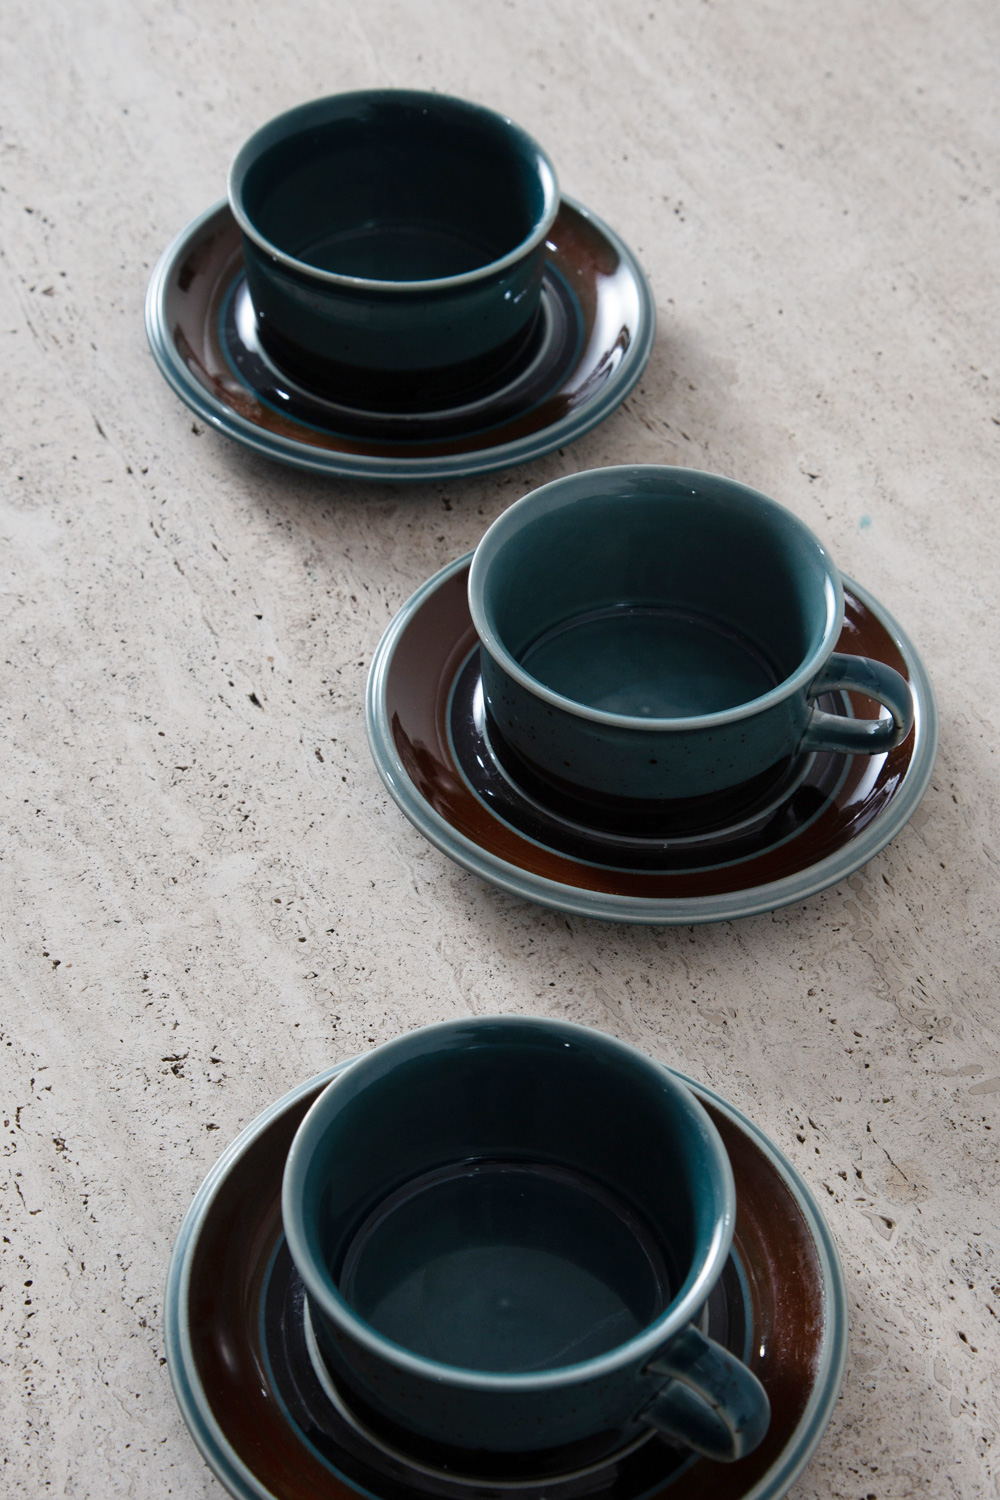 Tea Cup & Saucer  Set “Meri” for ARABIA by Ulla Procope